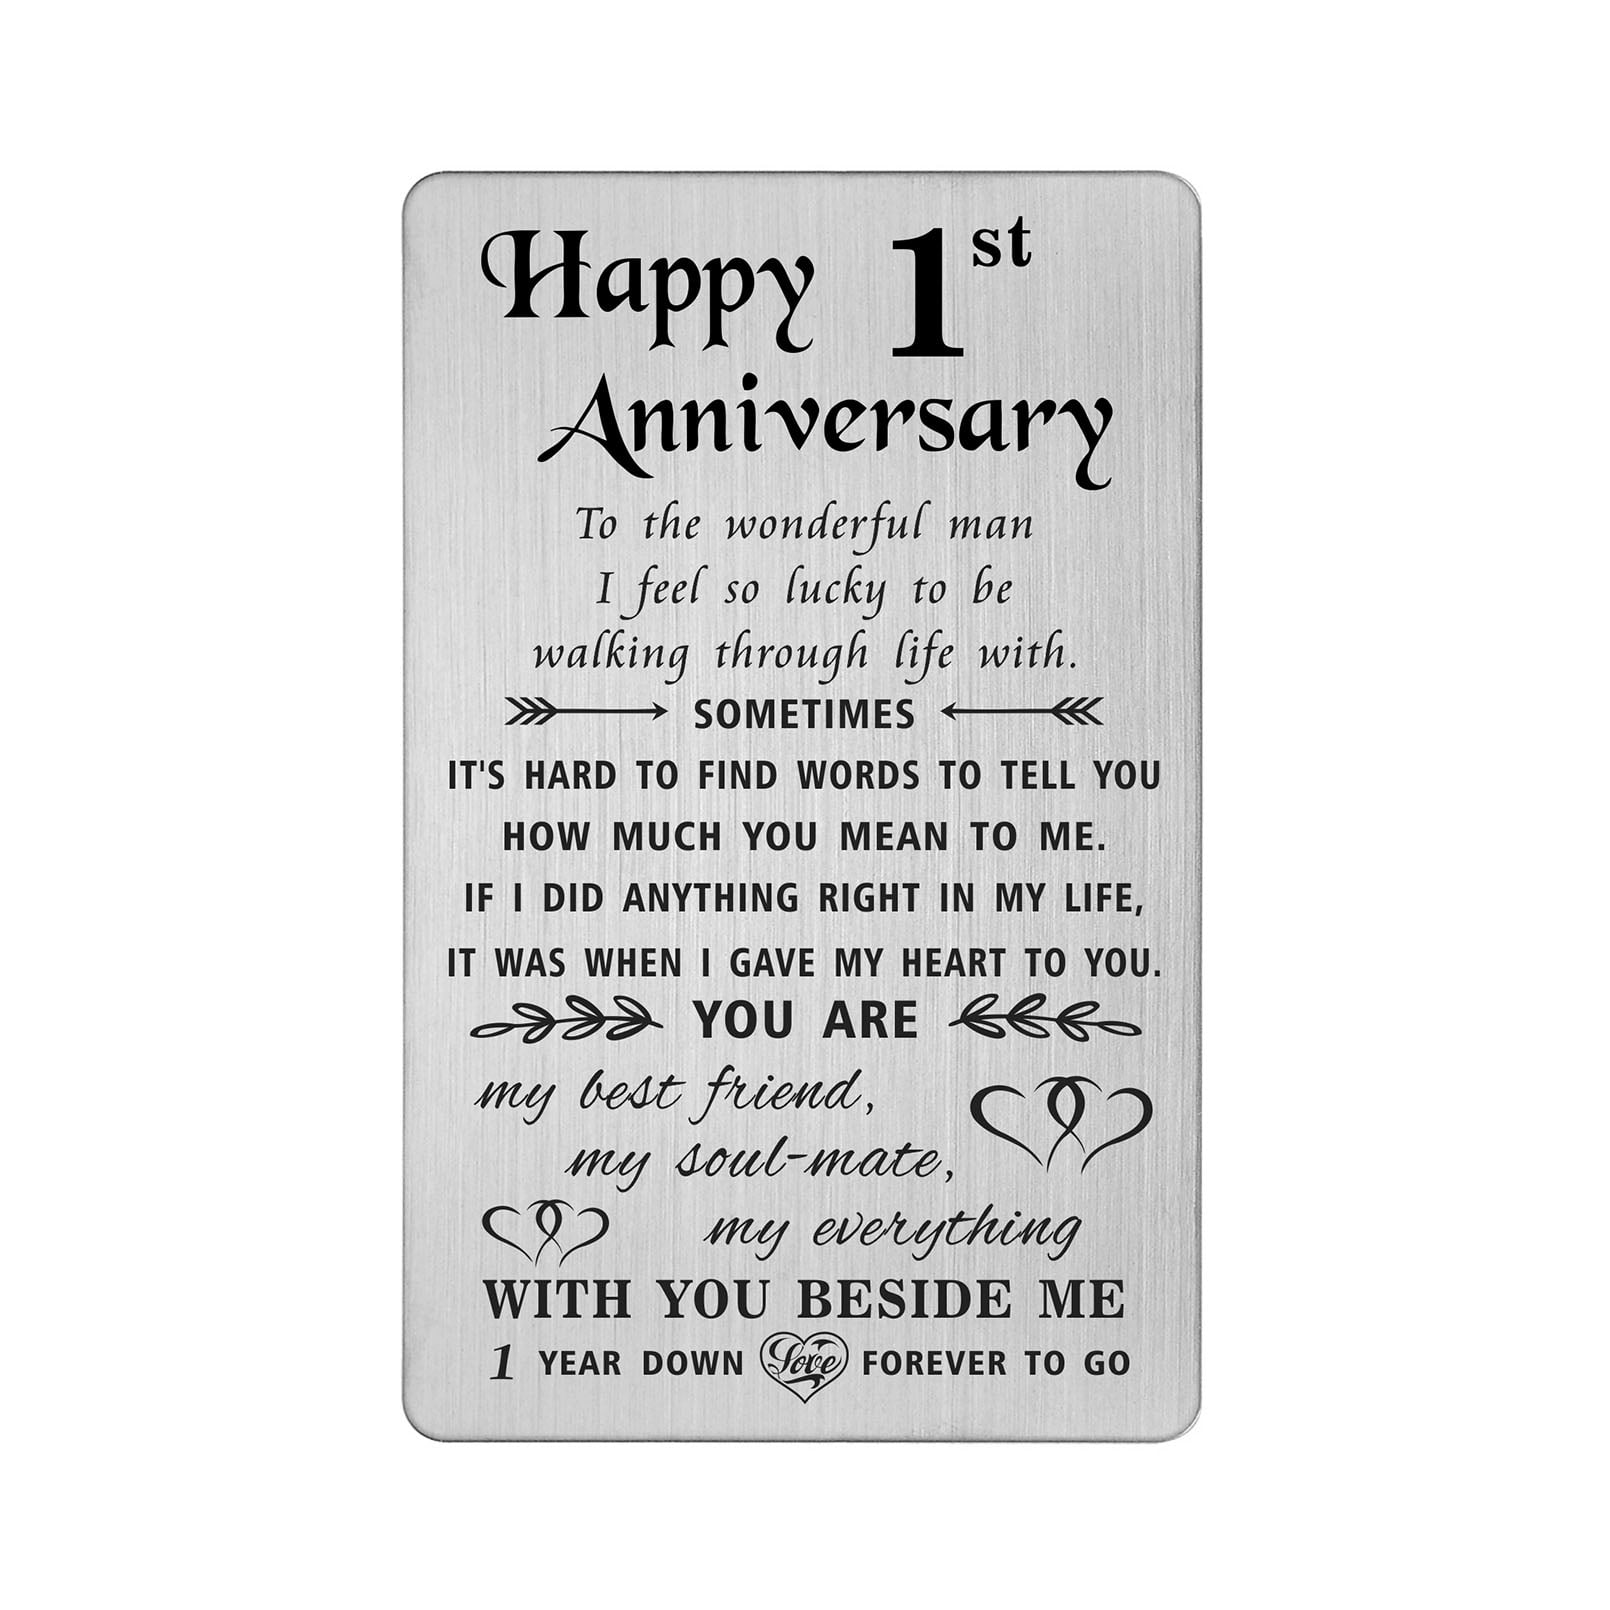 Digital Oasis Congratulations Card 10 Wedding Anniversary Card #002 